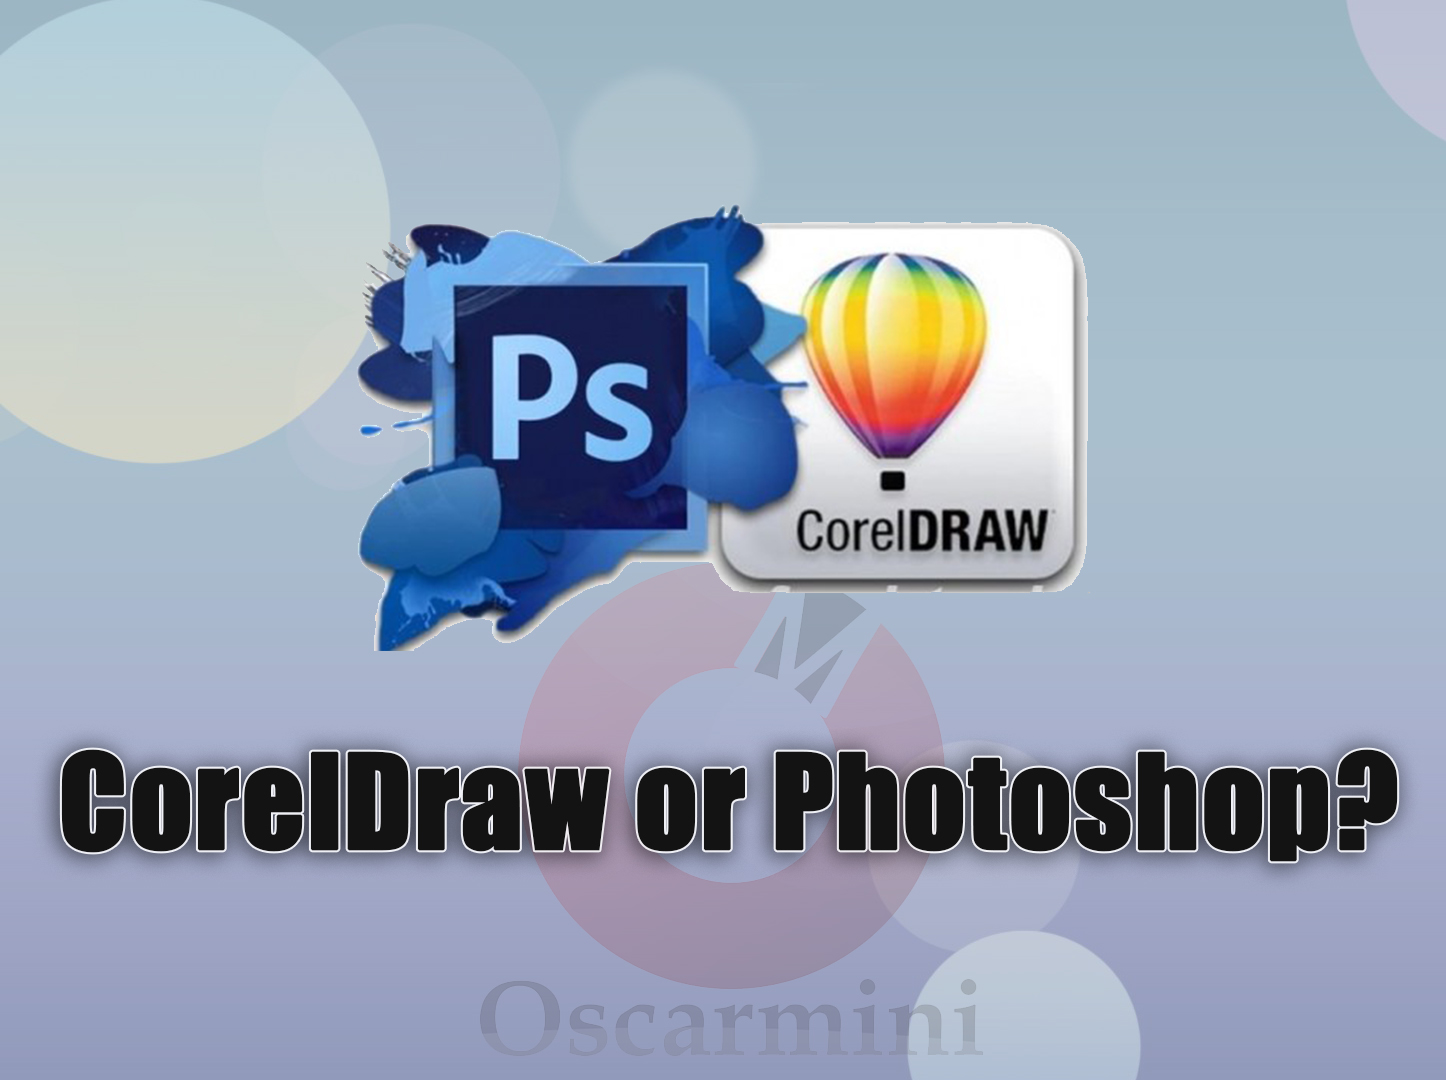 Corel Draw vs Adobe Photoshop